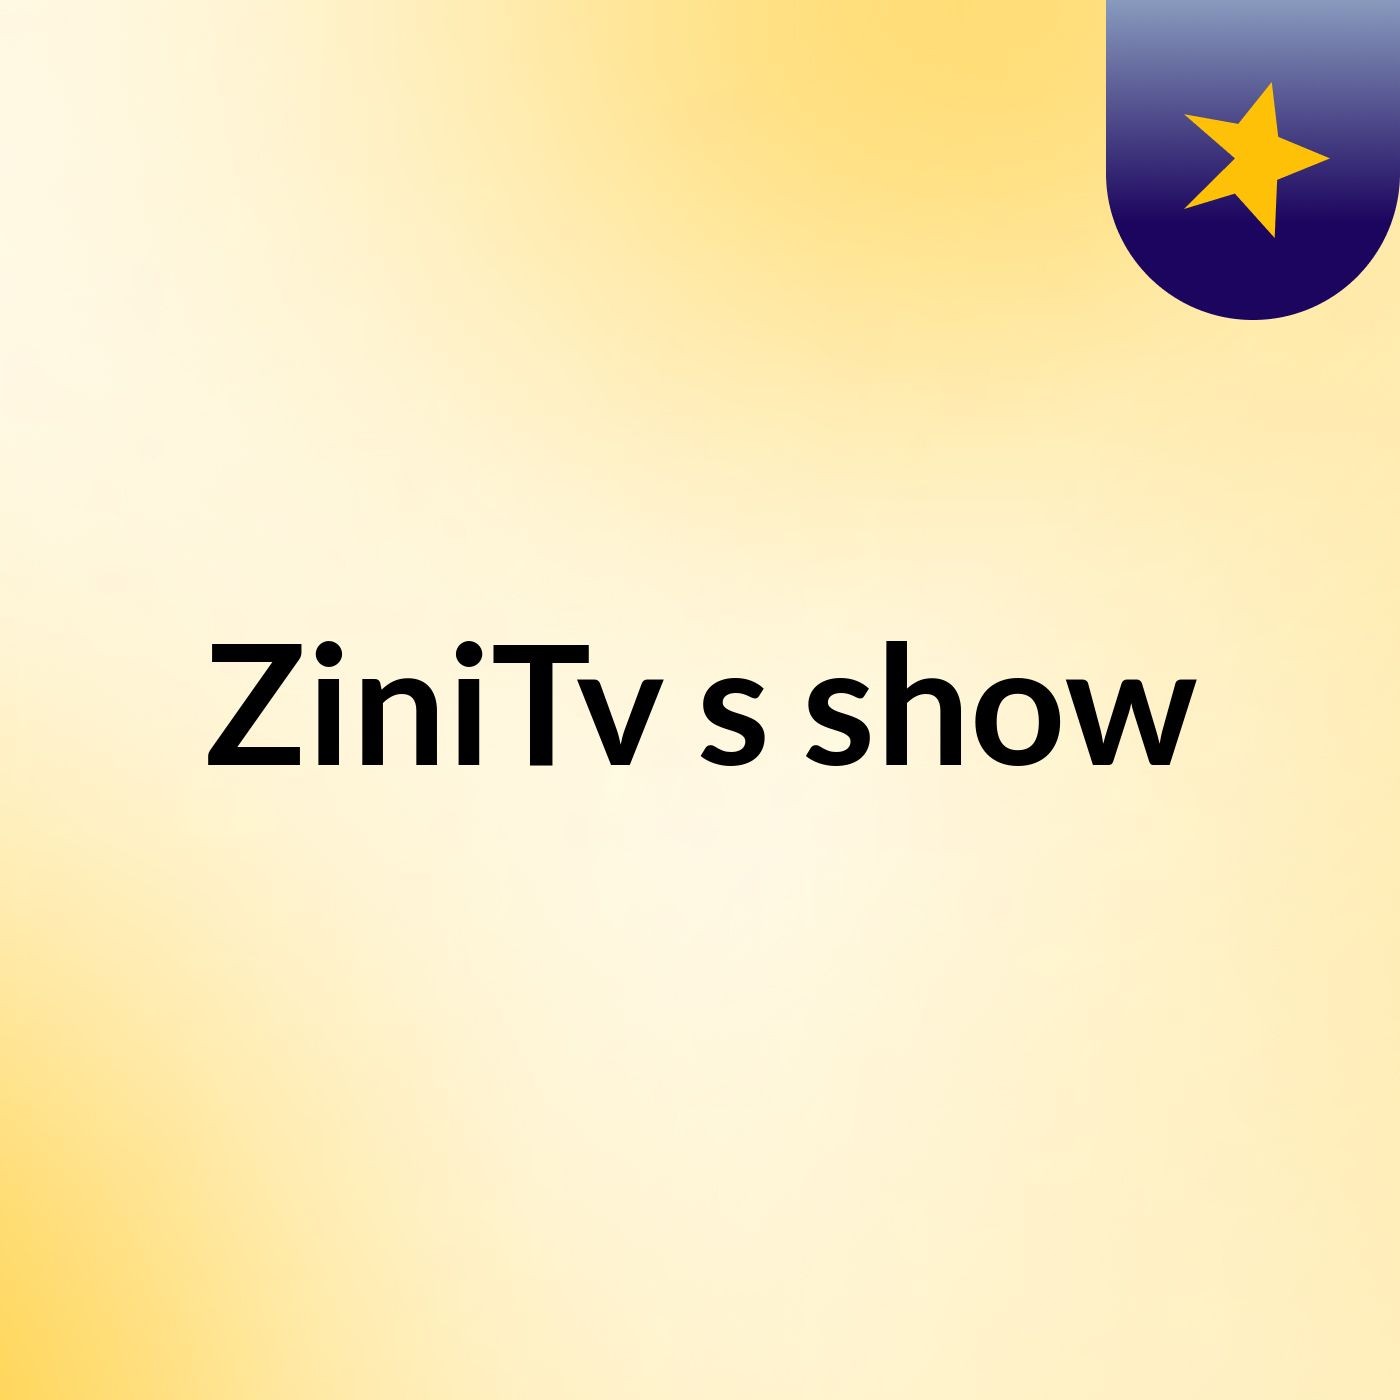 ZiniTv's show